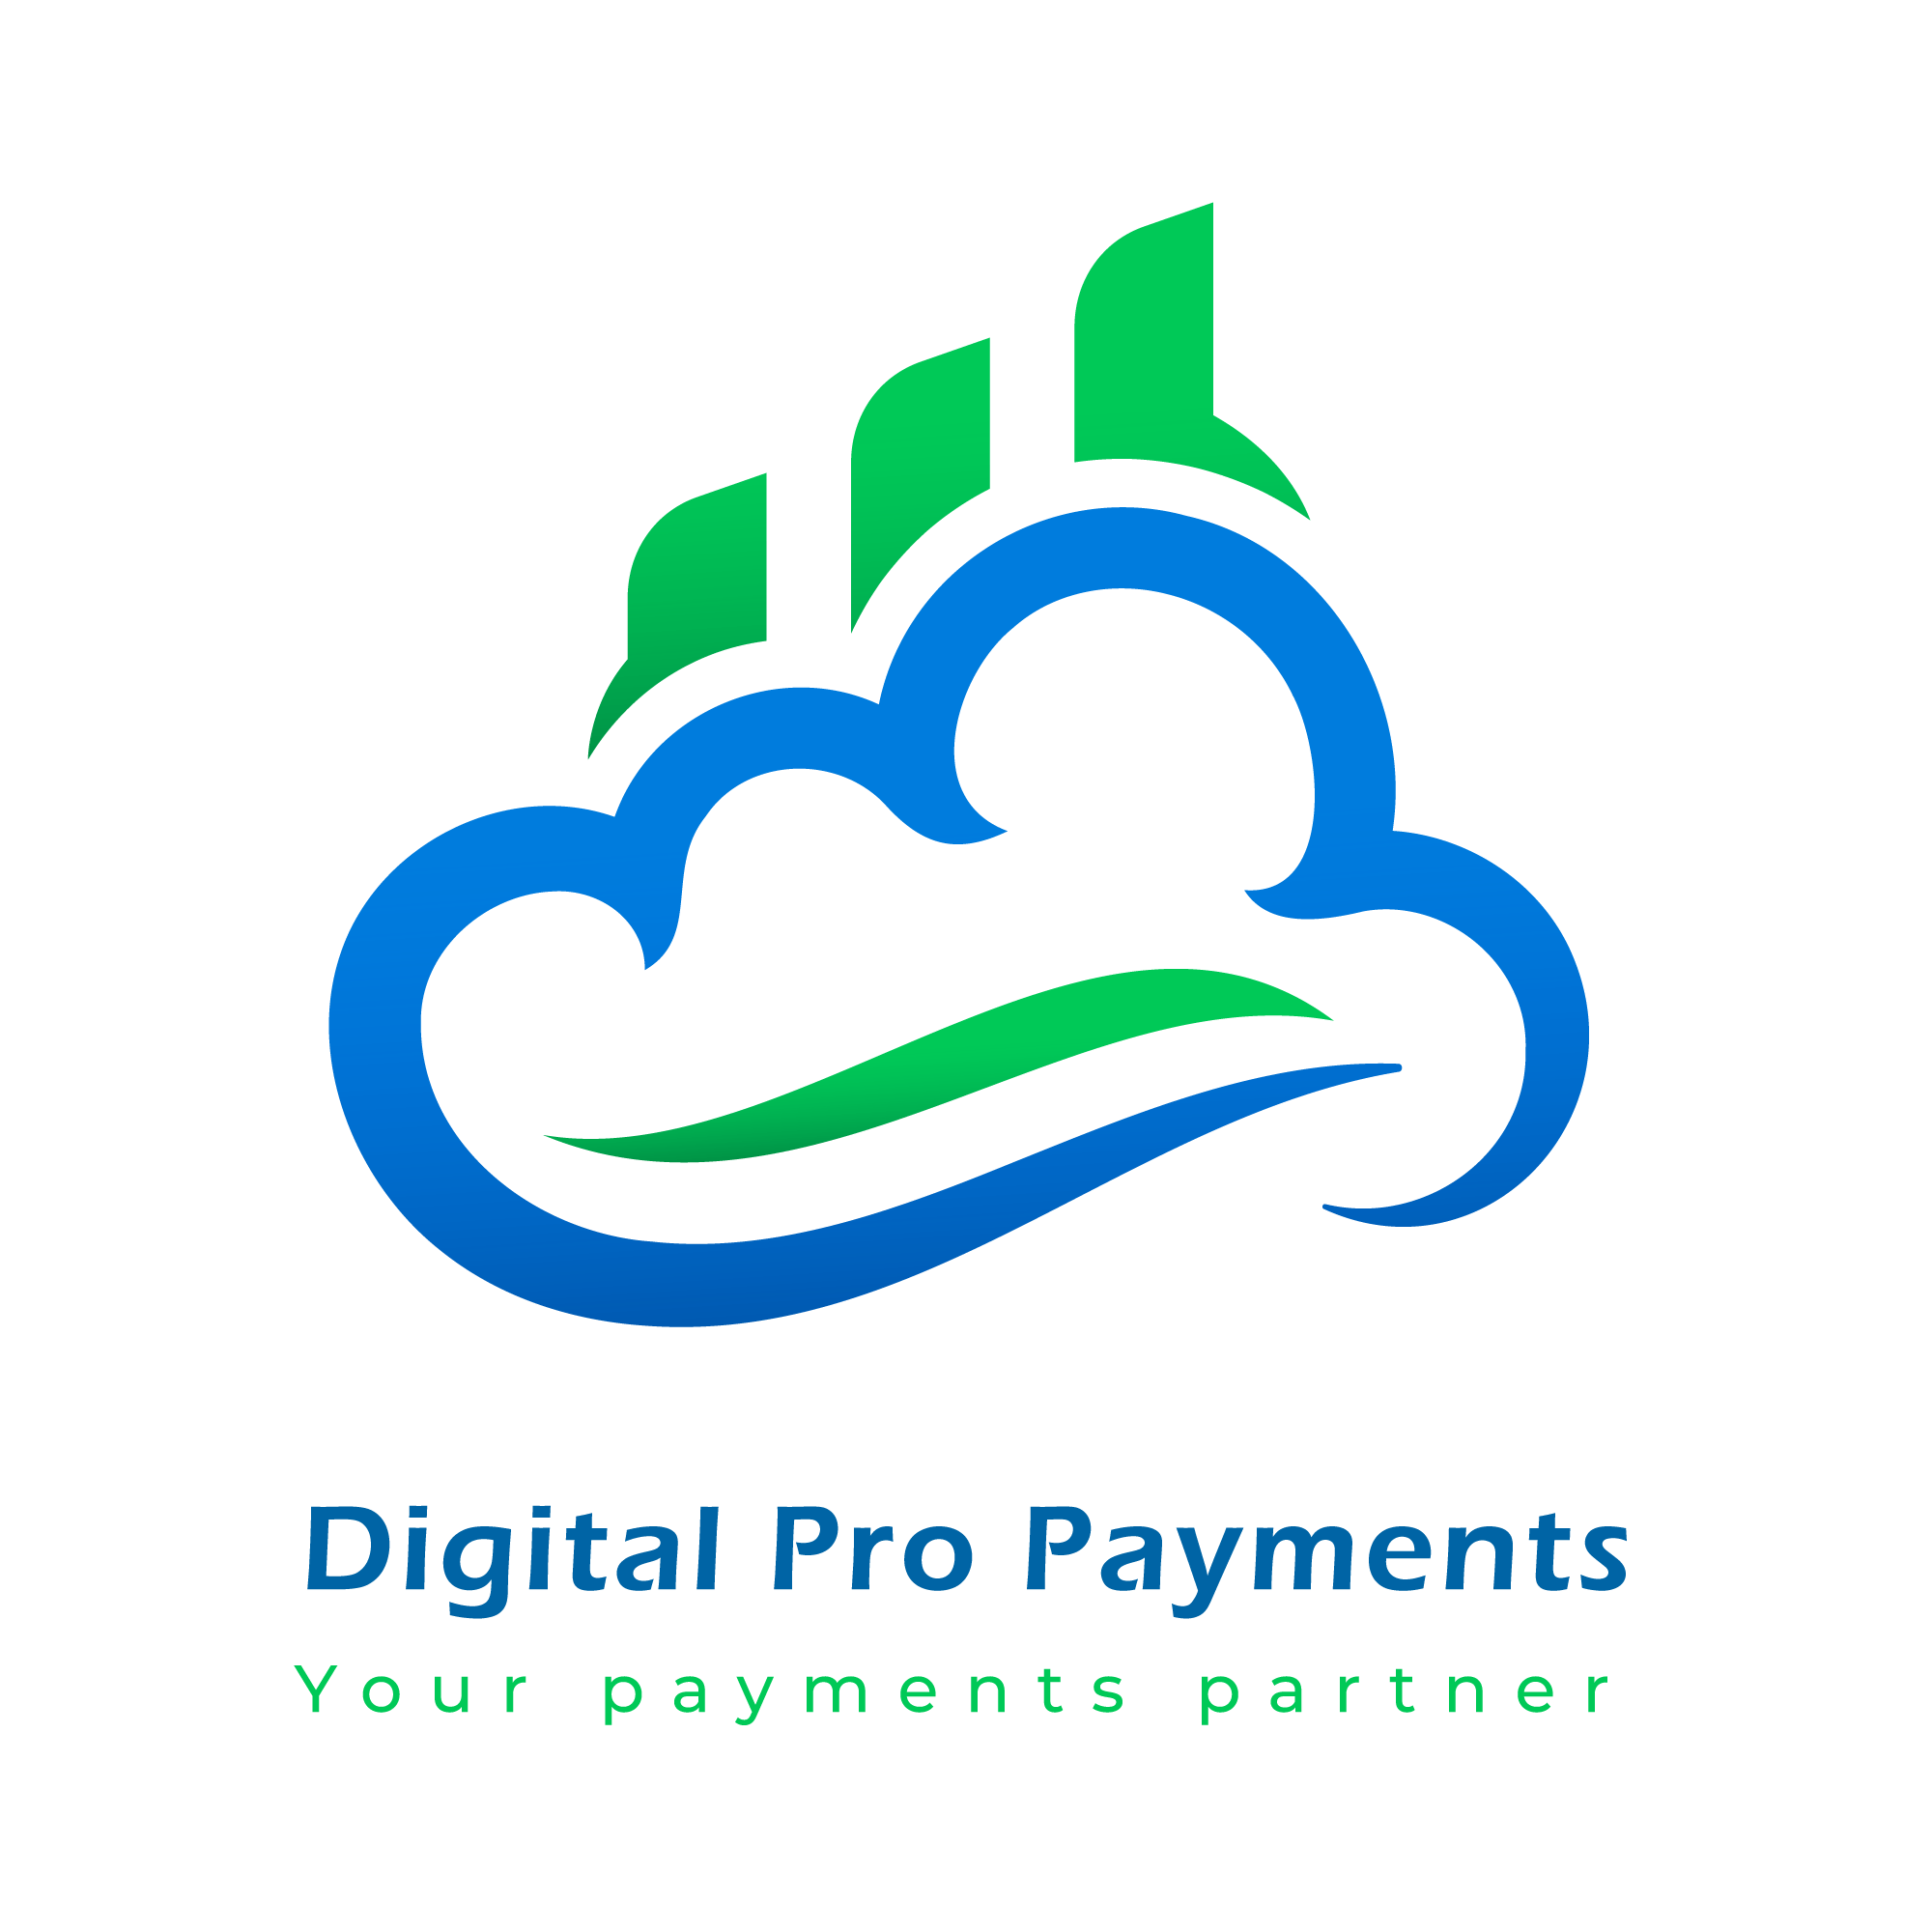 Digital Pro Payments